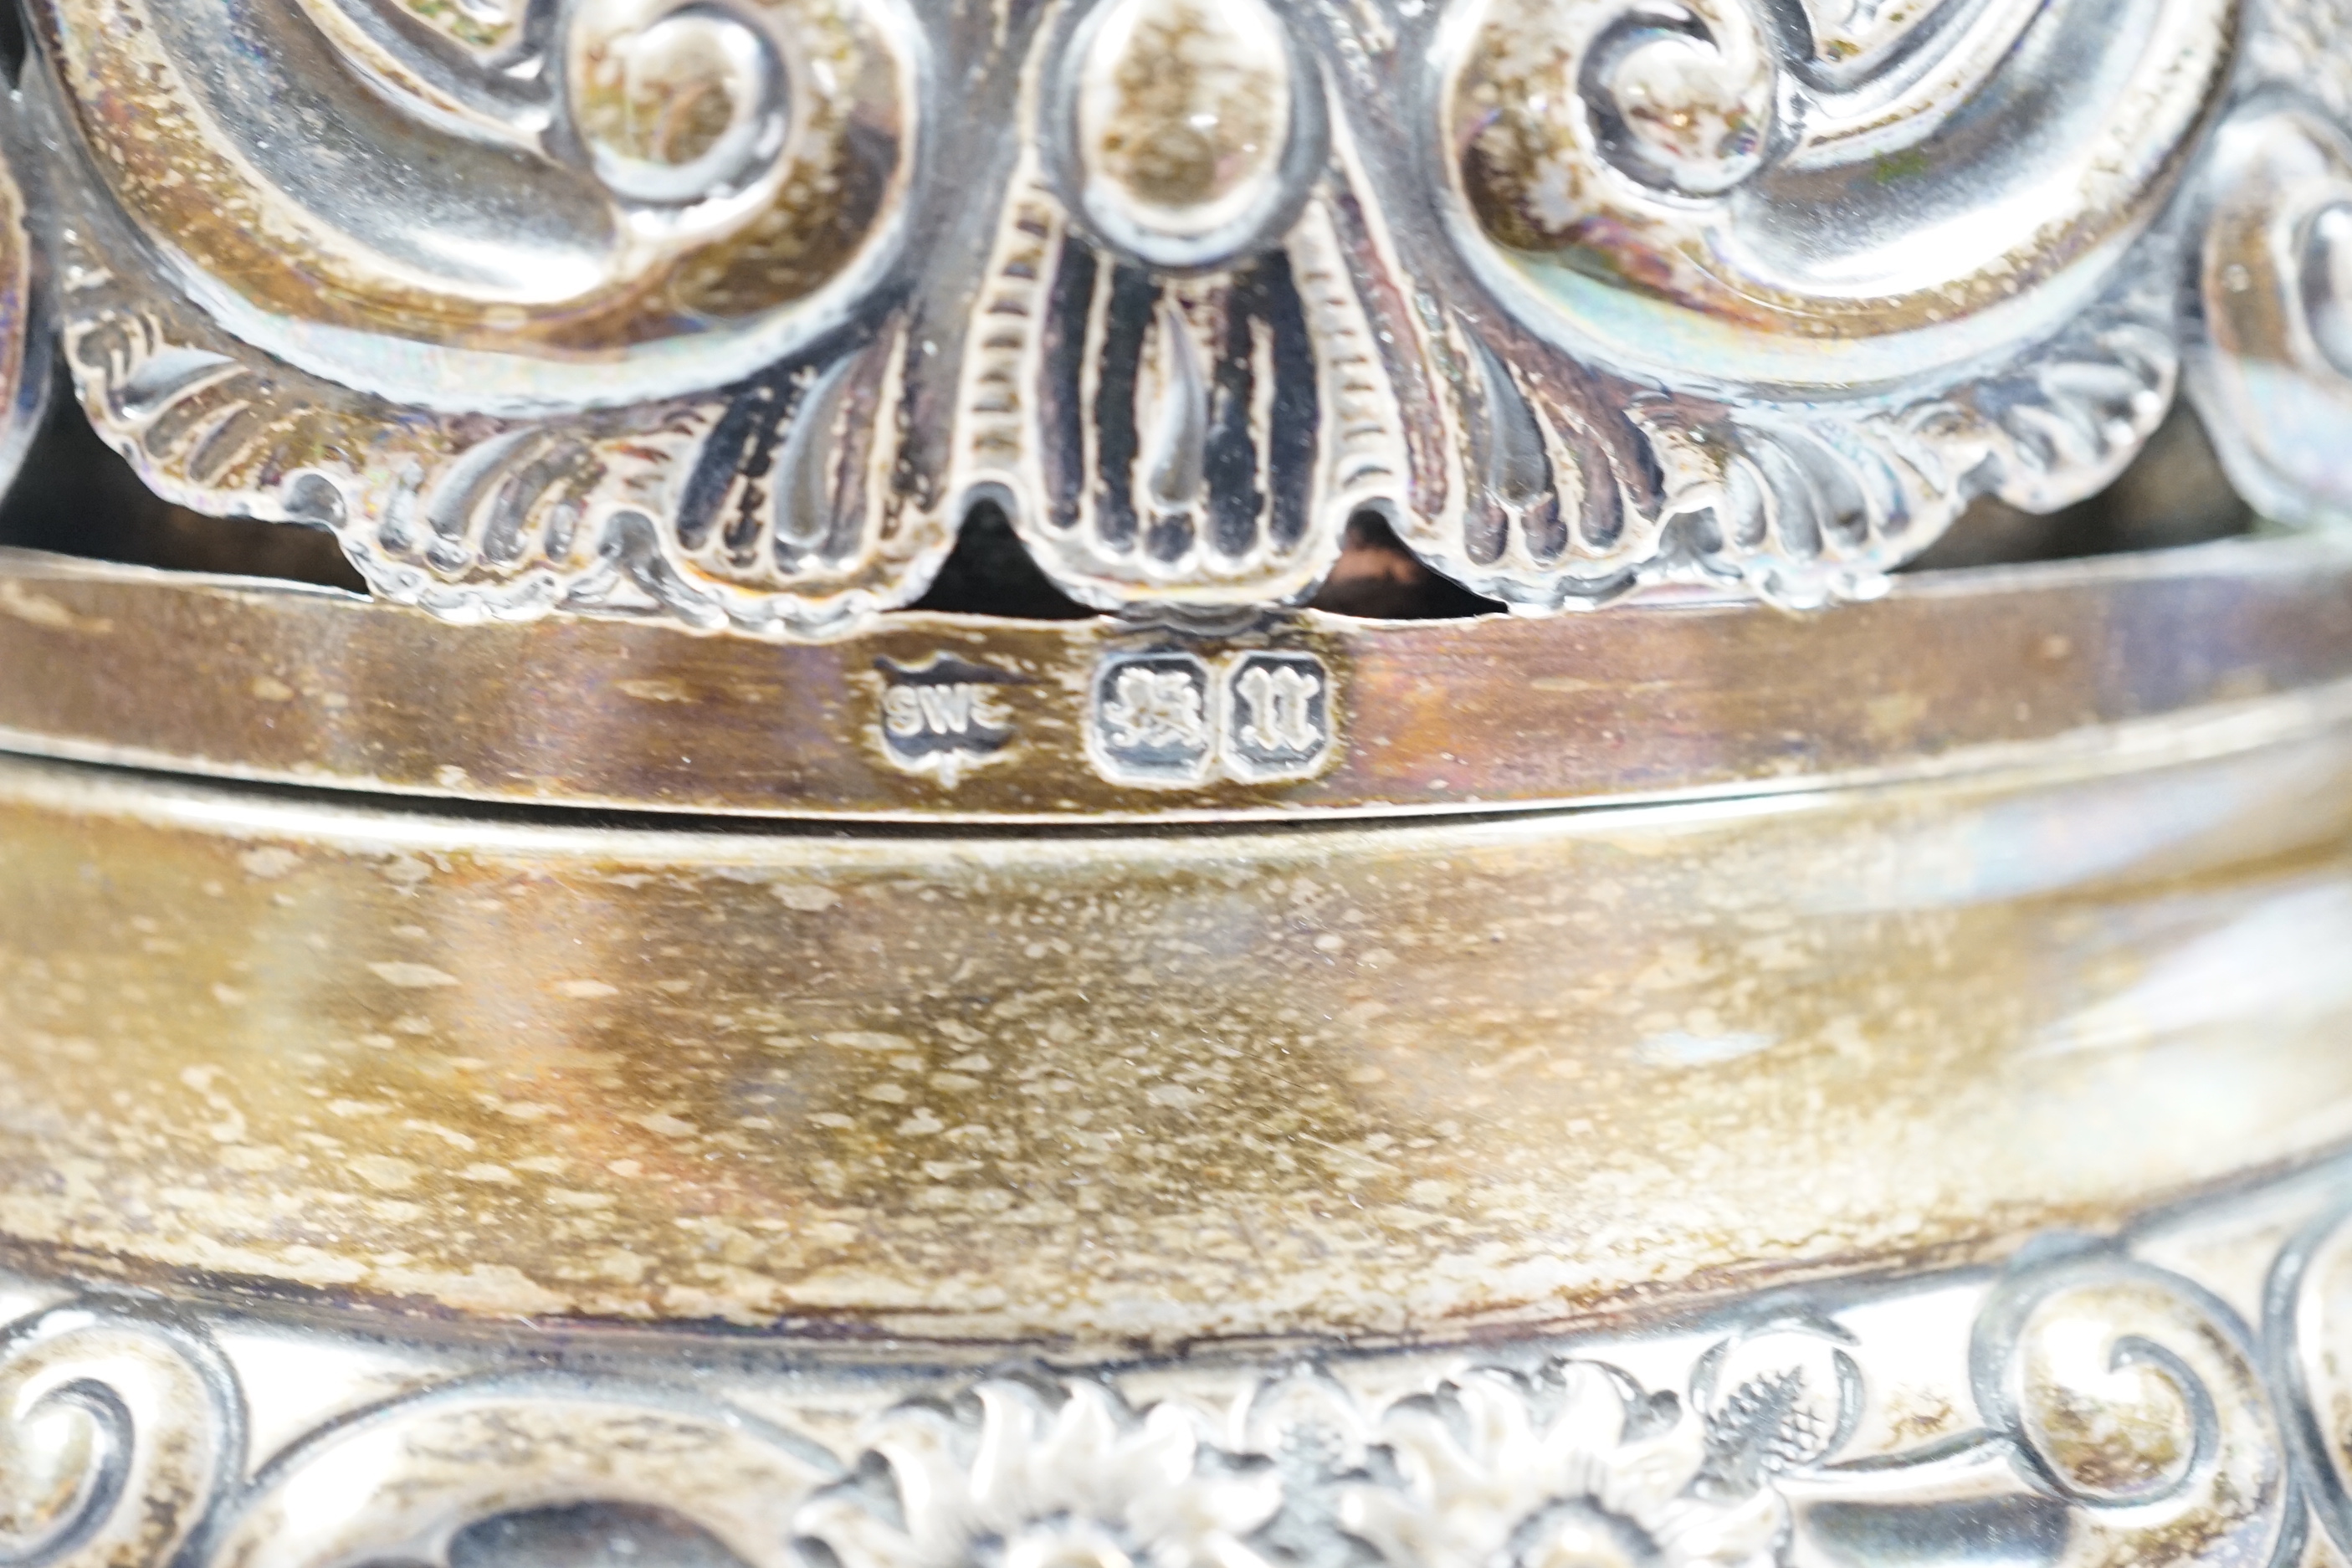 A late Victorian pierced silver mounted table bell, Samuel Walton Smith, Birmingham, 1894, base diameter 13.2cm.